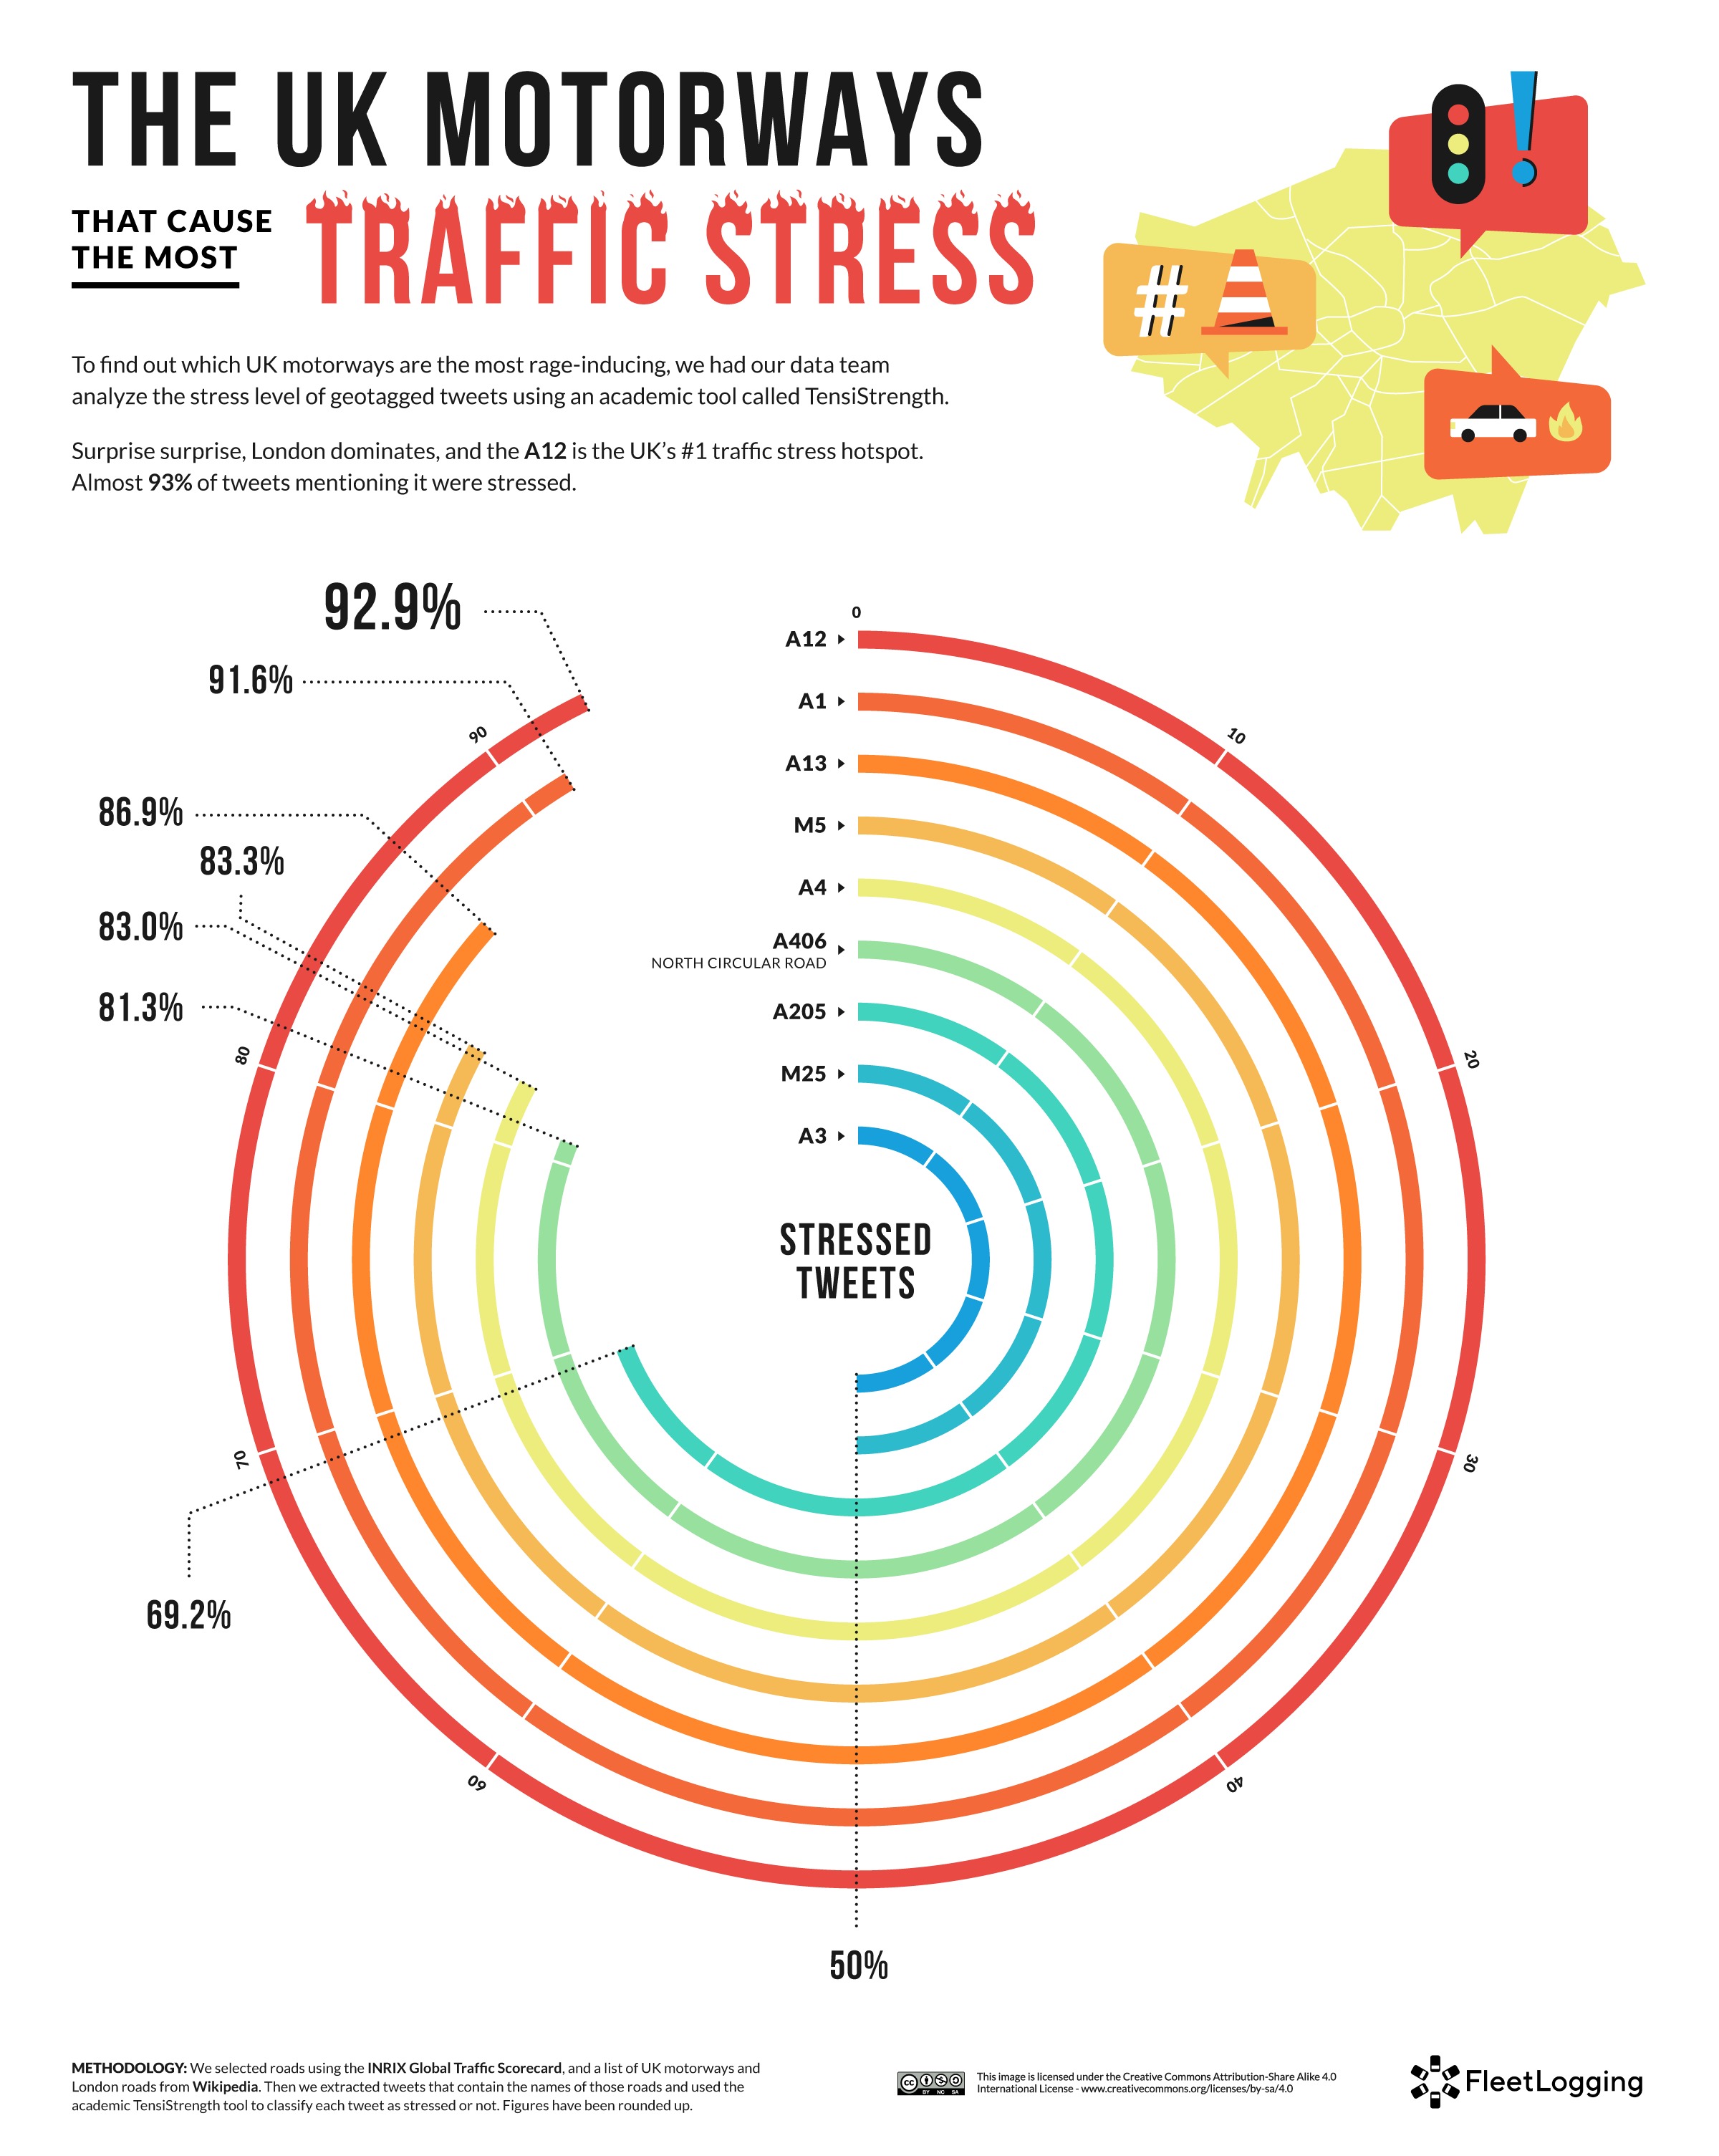 Stressful traffic. Picture: FleetLogging.com